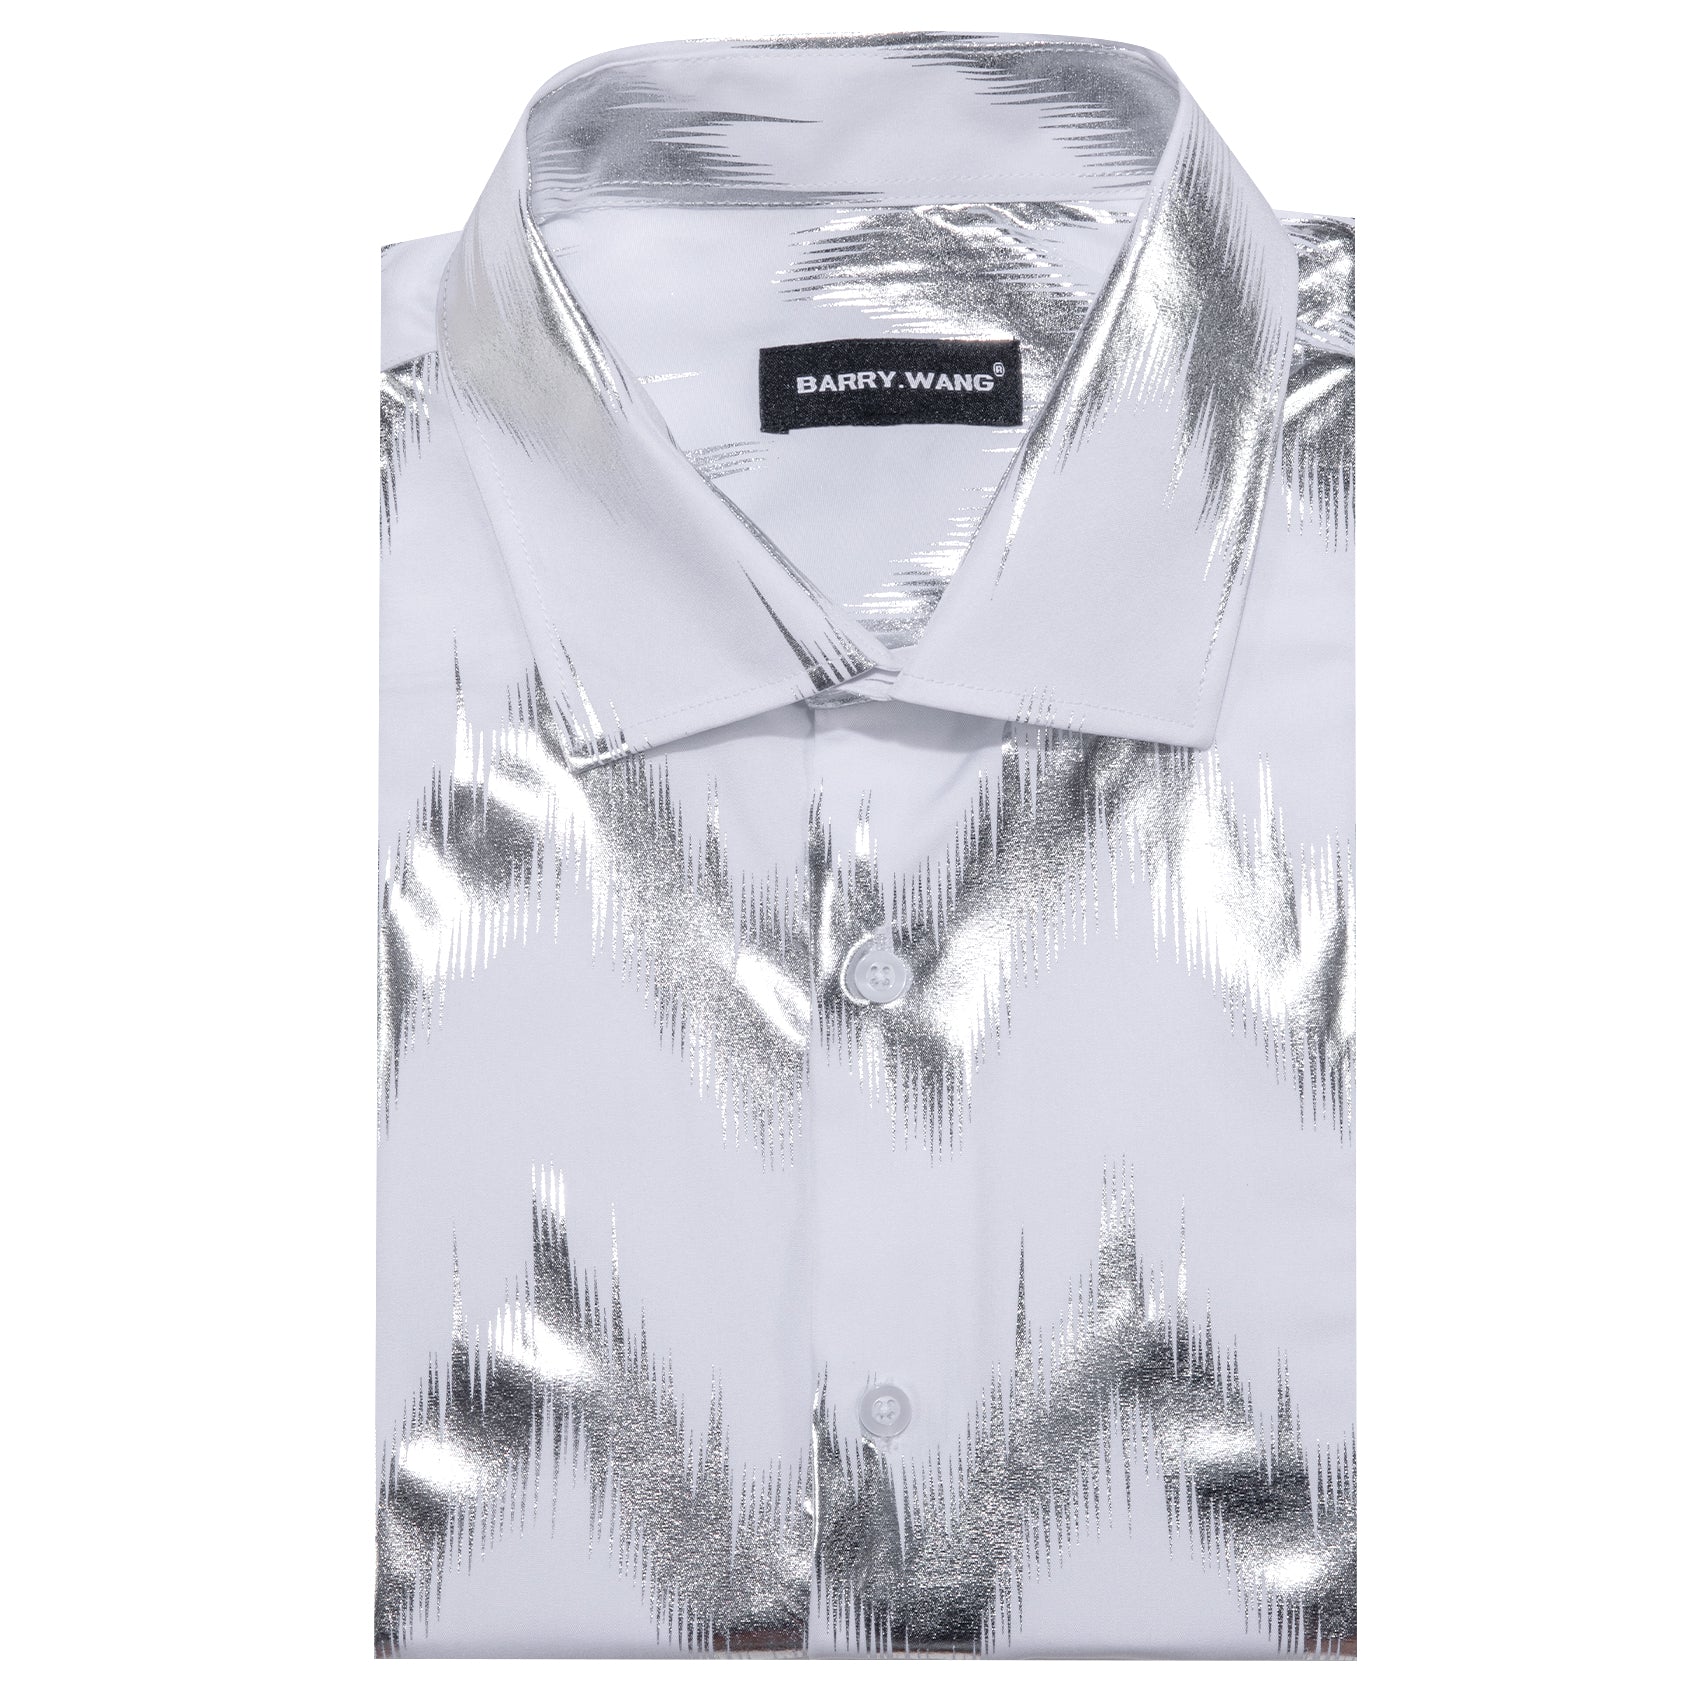 Barry.wang Stylish Shirt Bronzing Printing White Men's Shirt